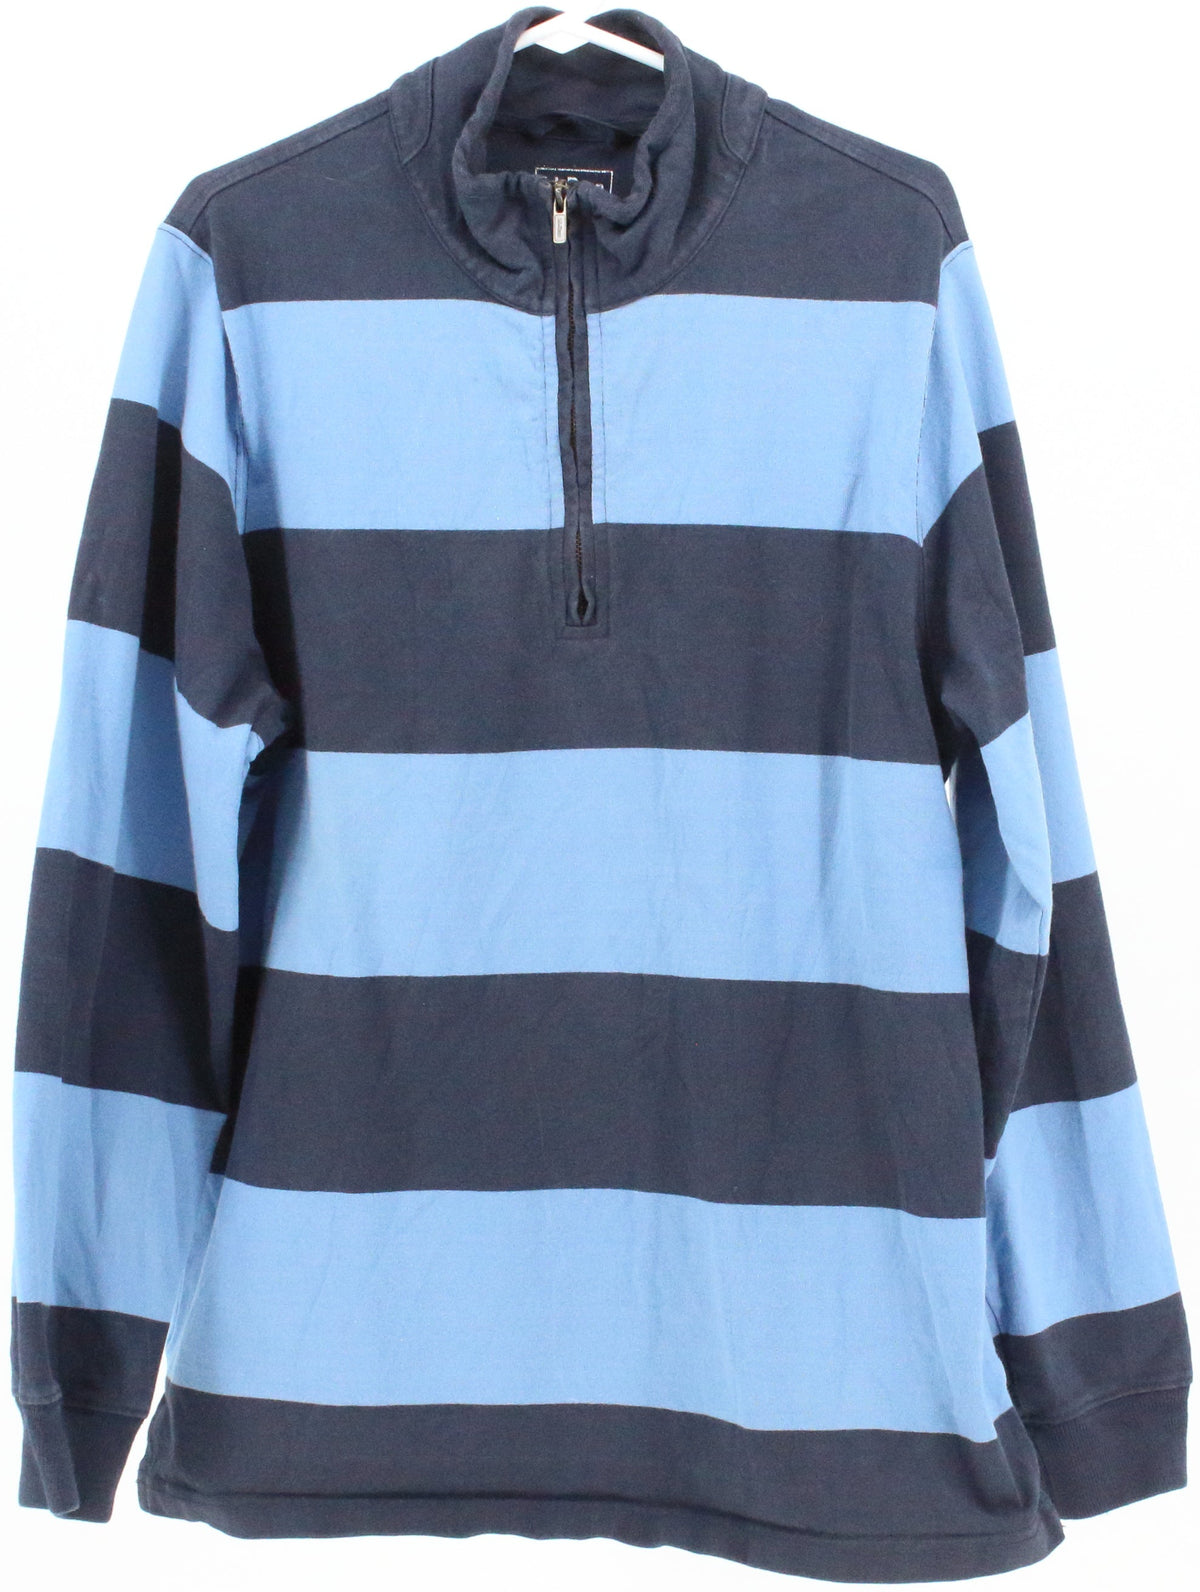 L.L.Bean Blue and Navy Blue Striped Long Sleeve Front Zipper T-Shirt